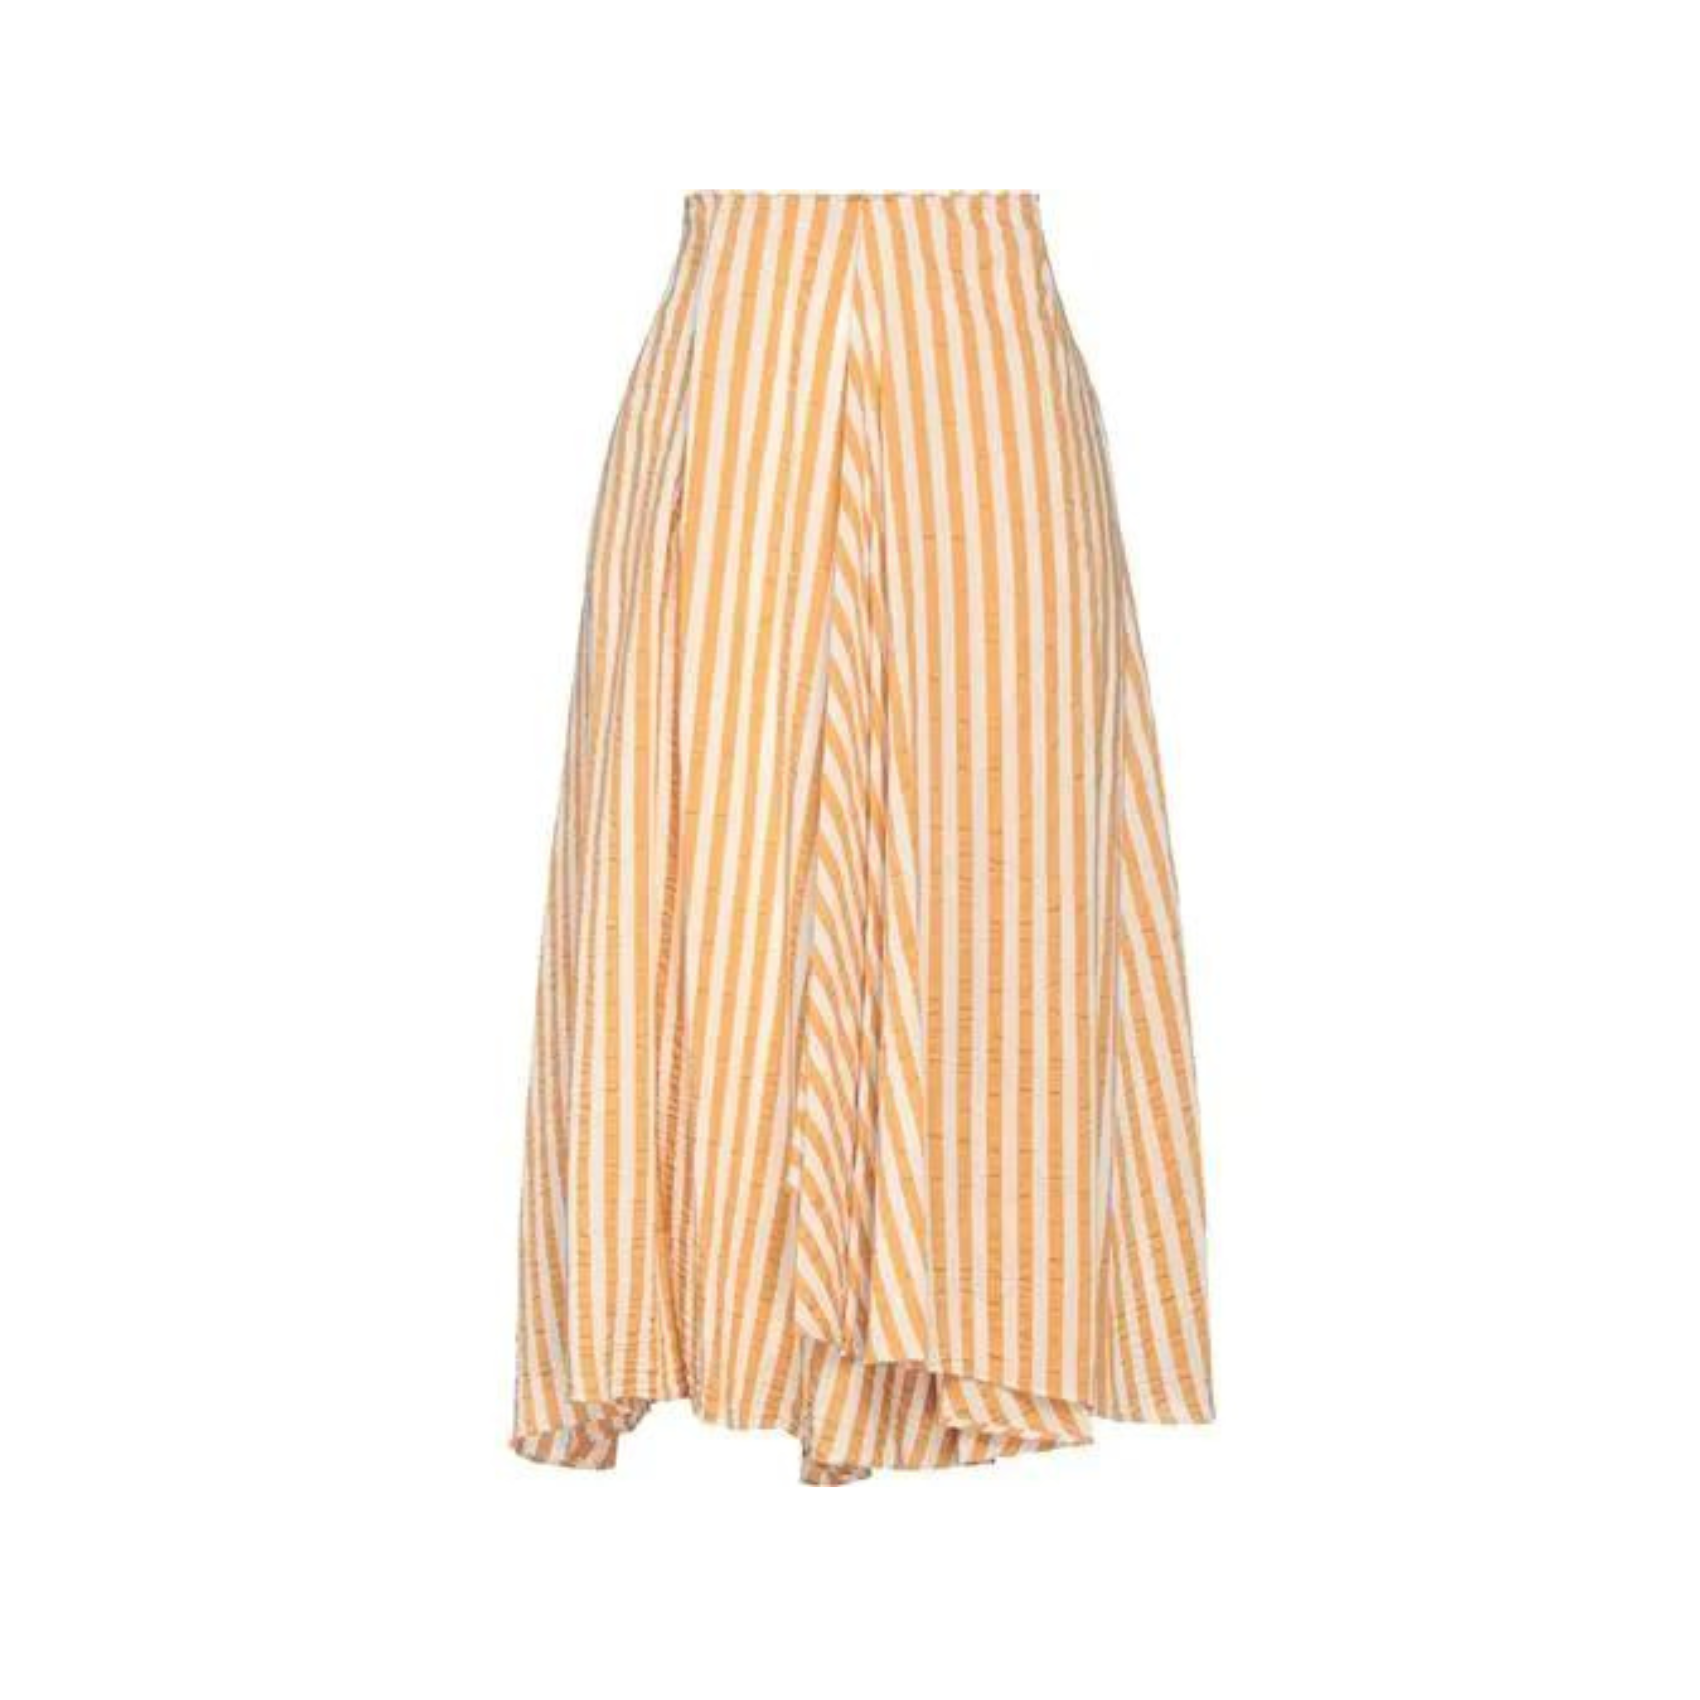 Skirt Stripe - White/Orange